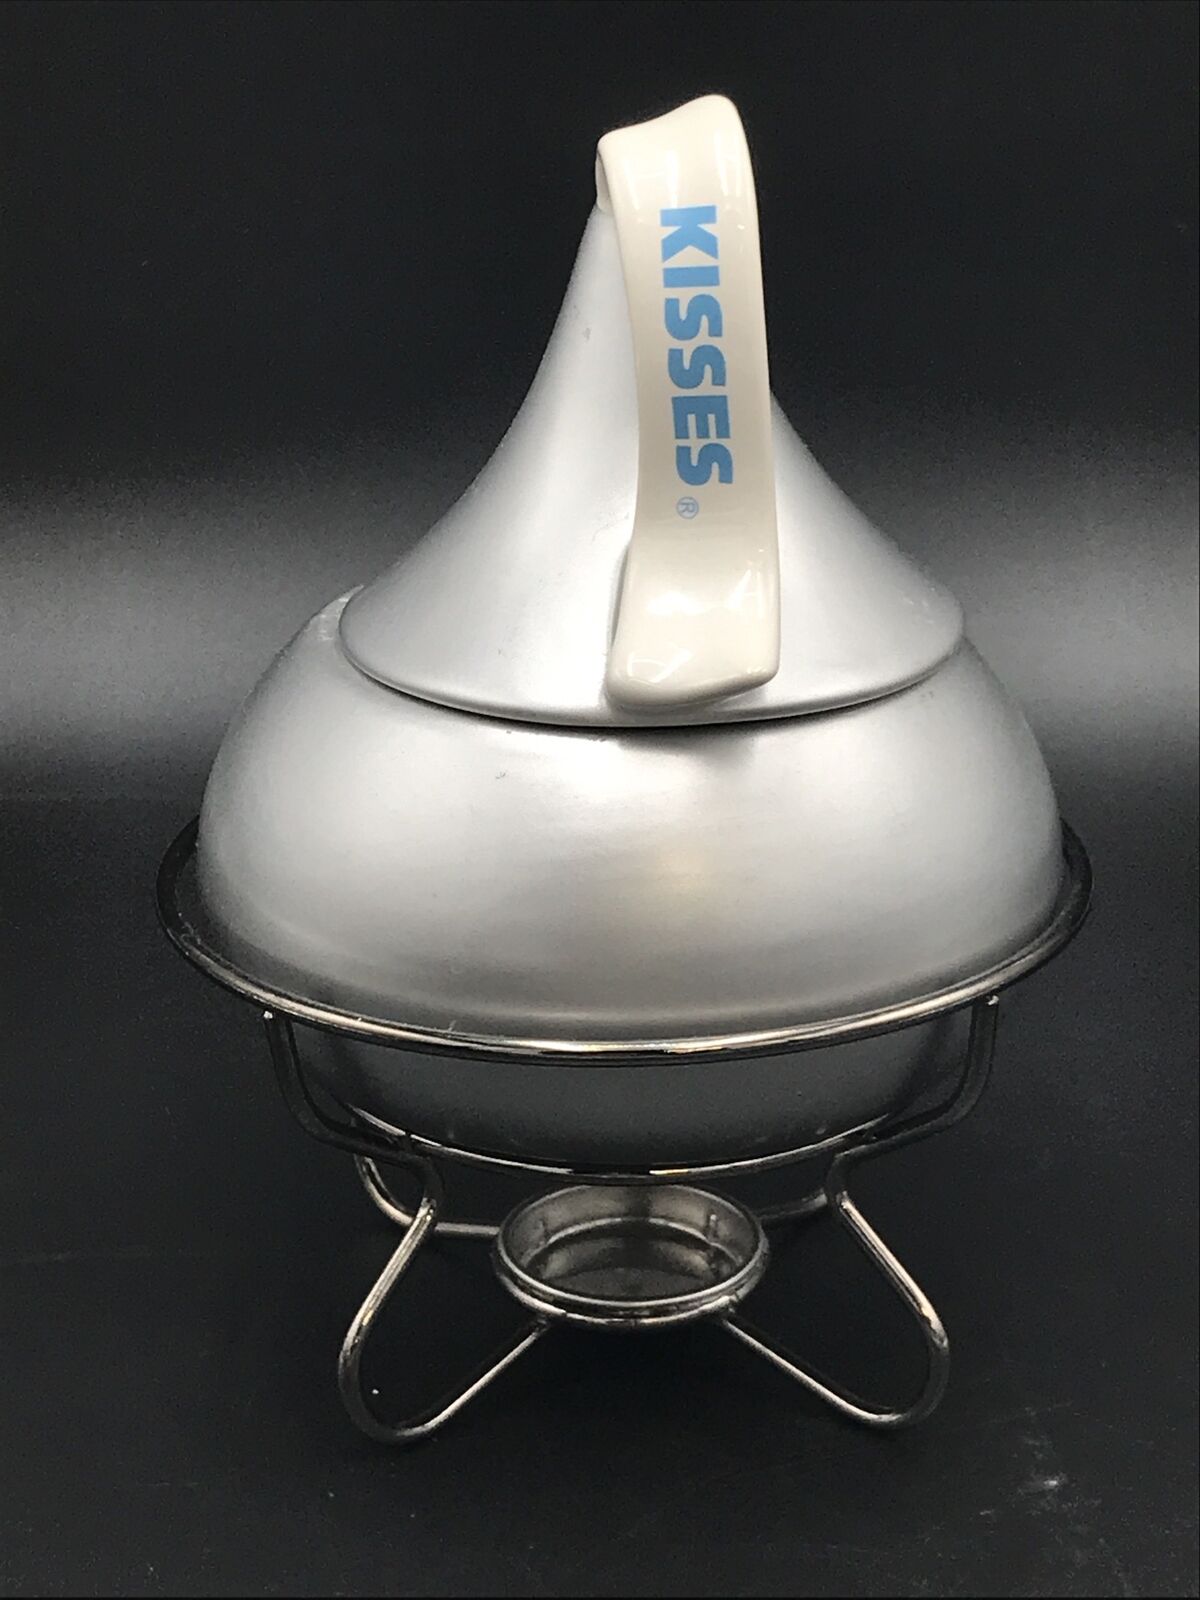 Hersey's Kiss 2006 Silver Ceramic Kisses Fondue Pot.